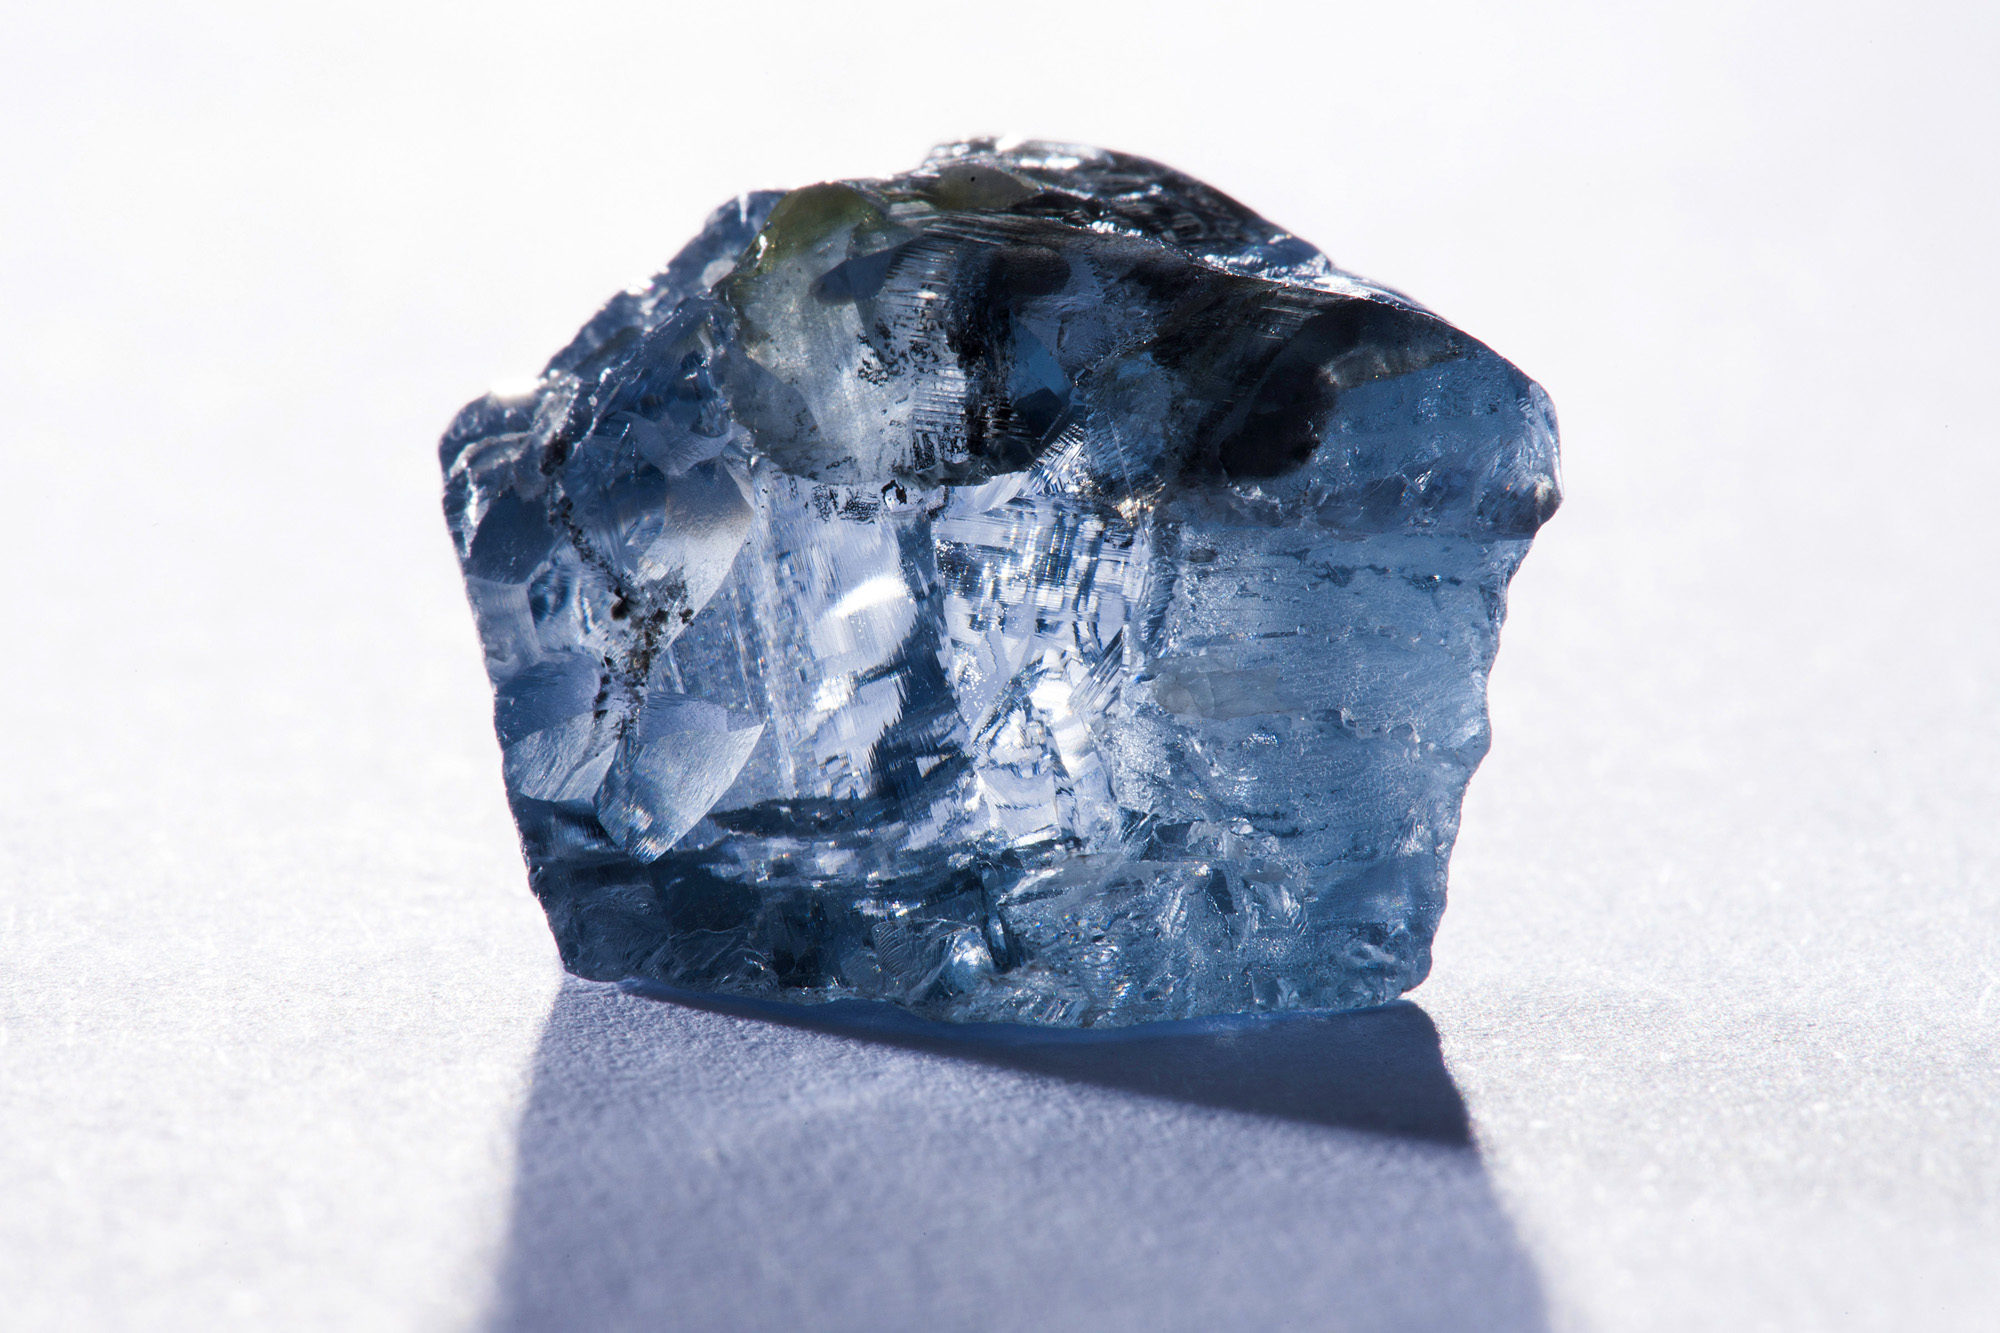 Rare, hefty blue diamond found in South Africa